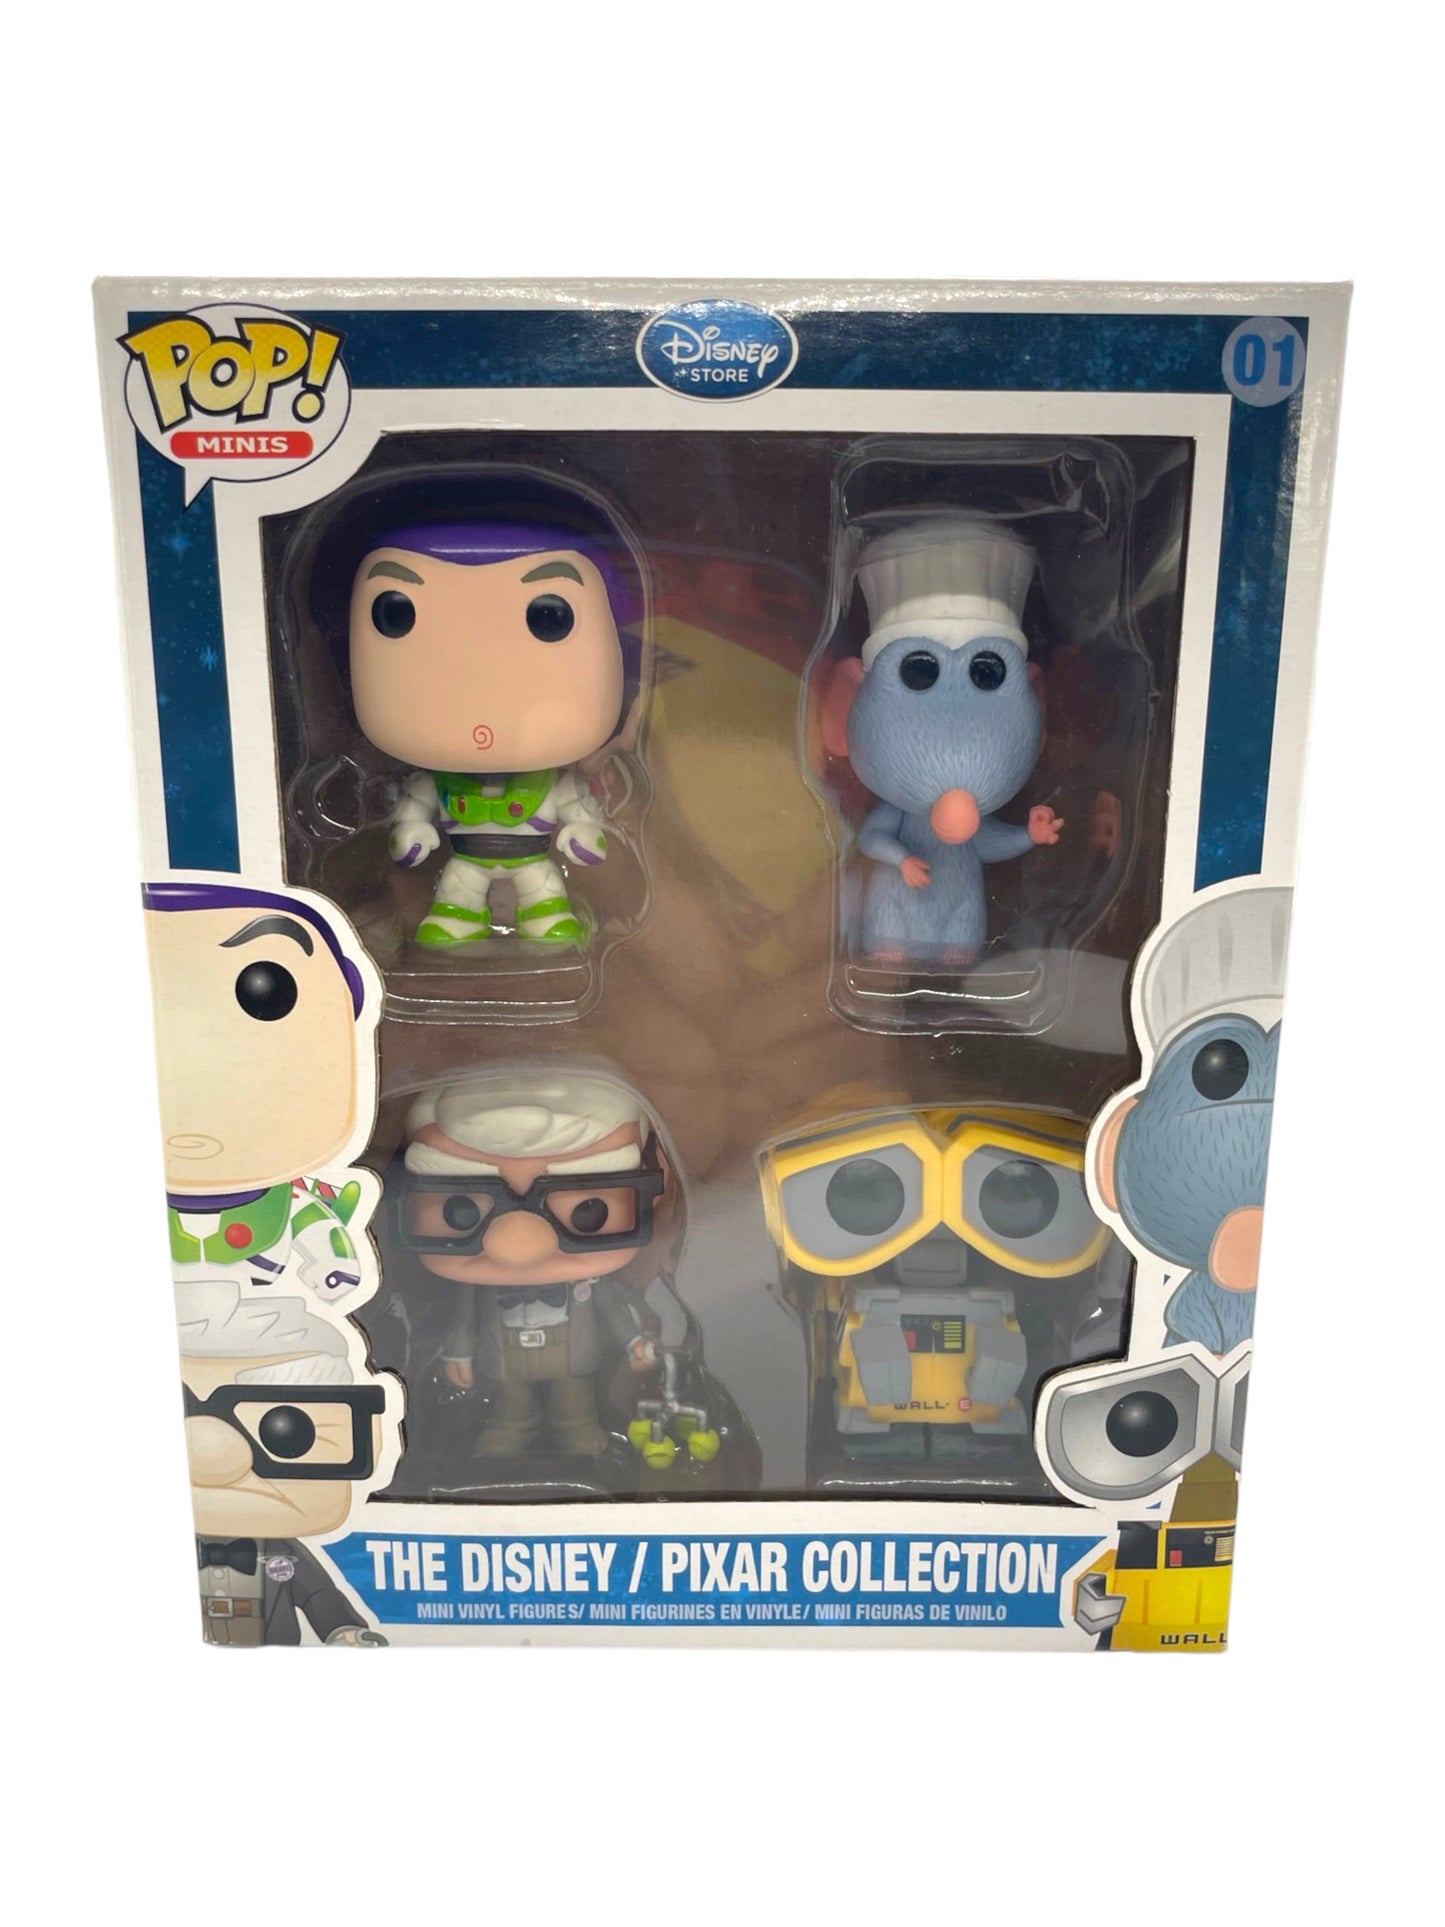 2013 Disney Pixar 4 Pack Shared Exclusive 01